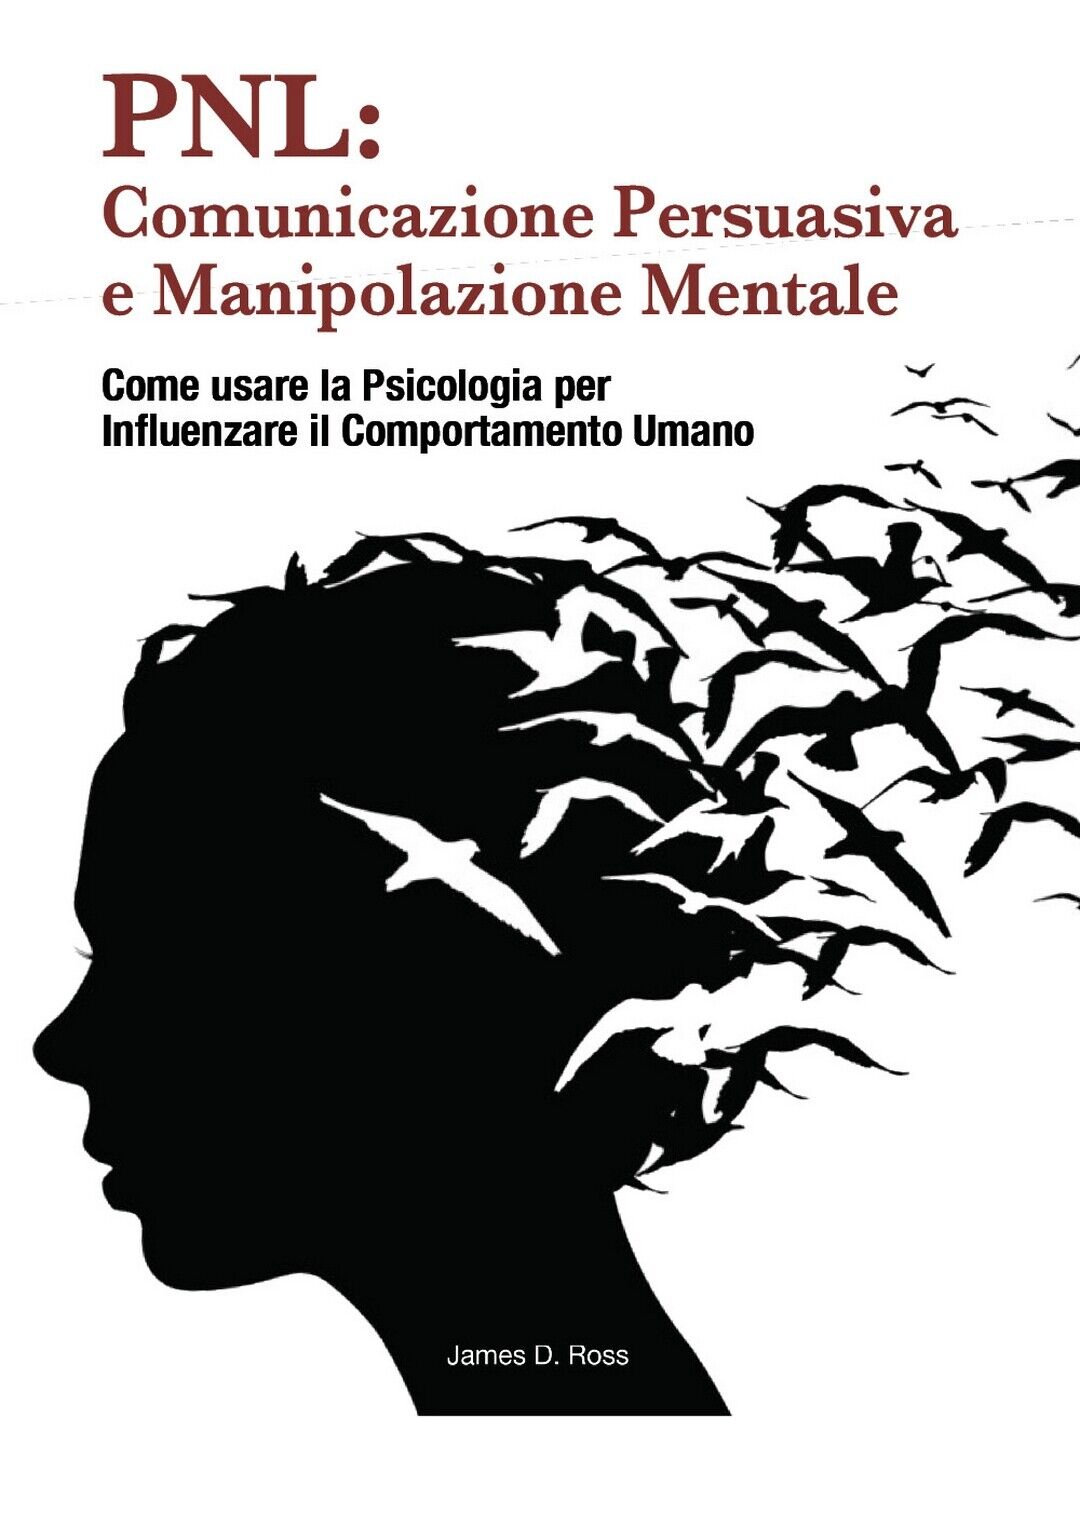 PNL: Comunicazione Persuasiva e Manipolazione Mentale  di James D. Ross,  2021